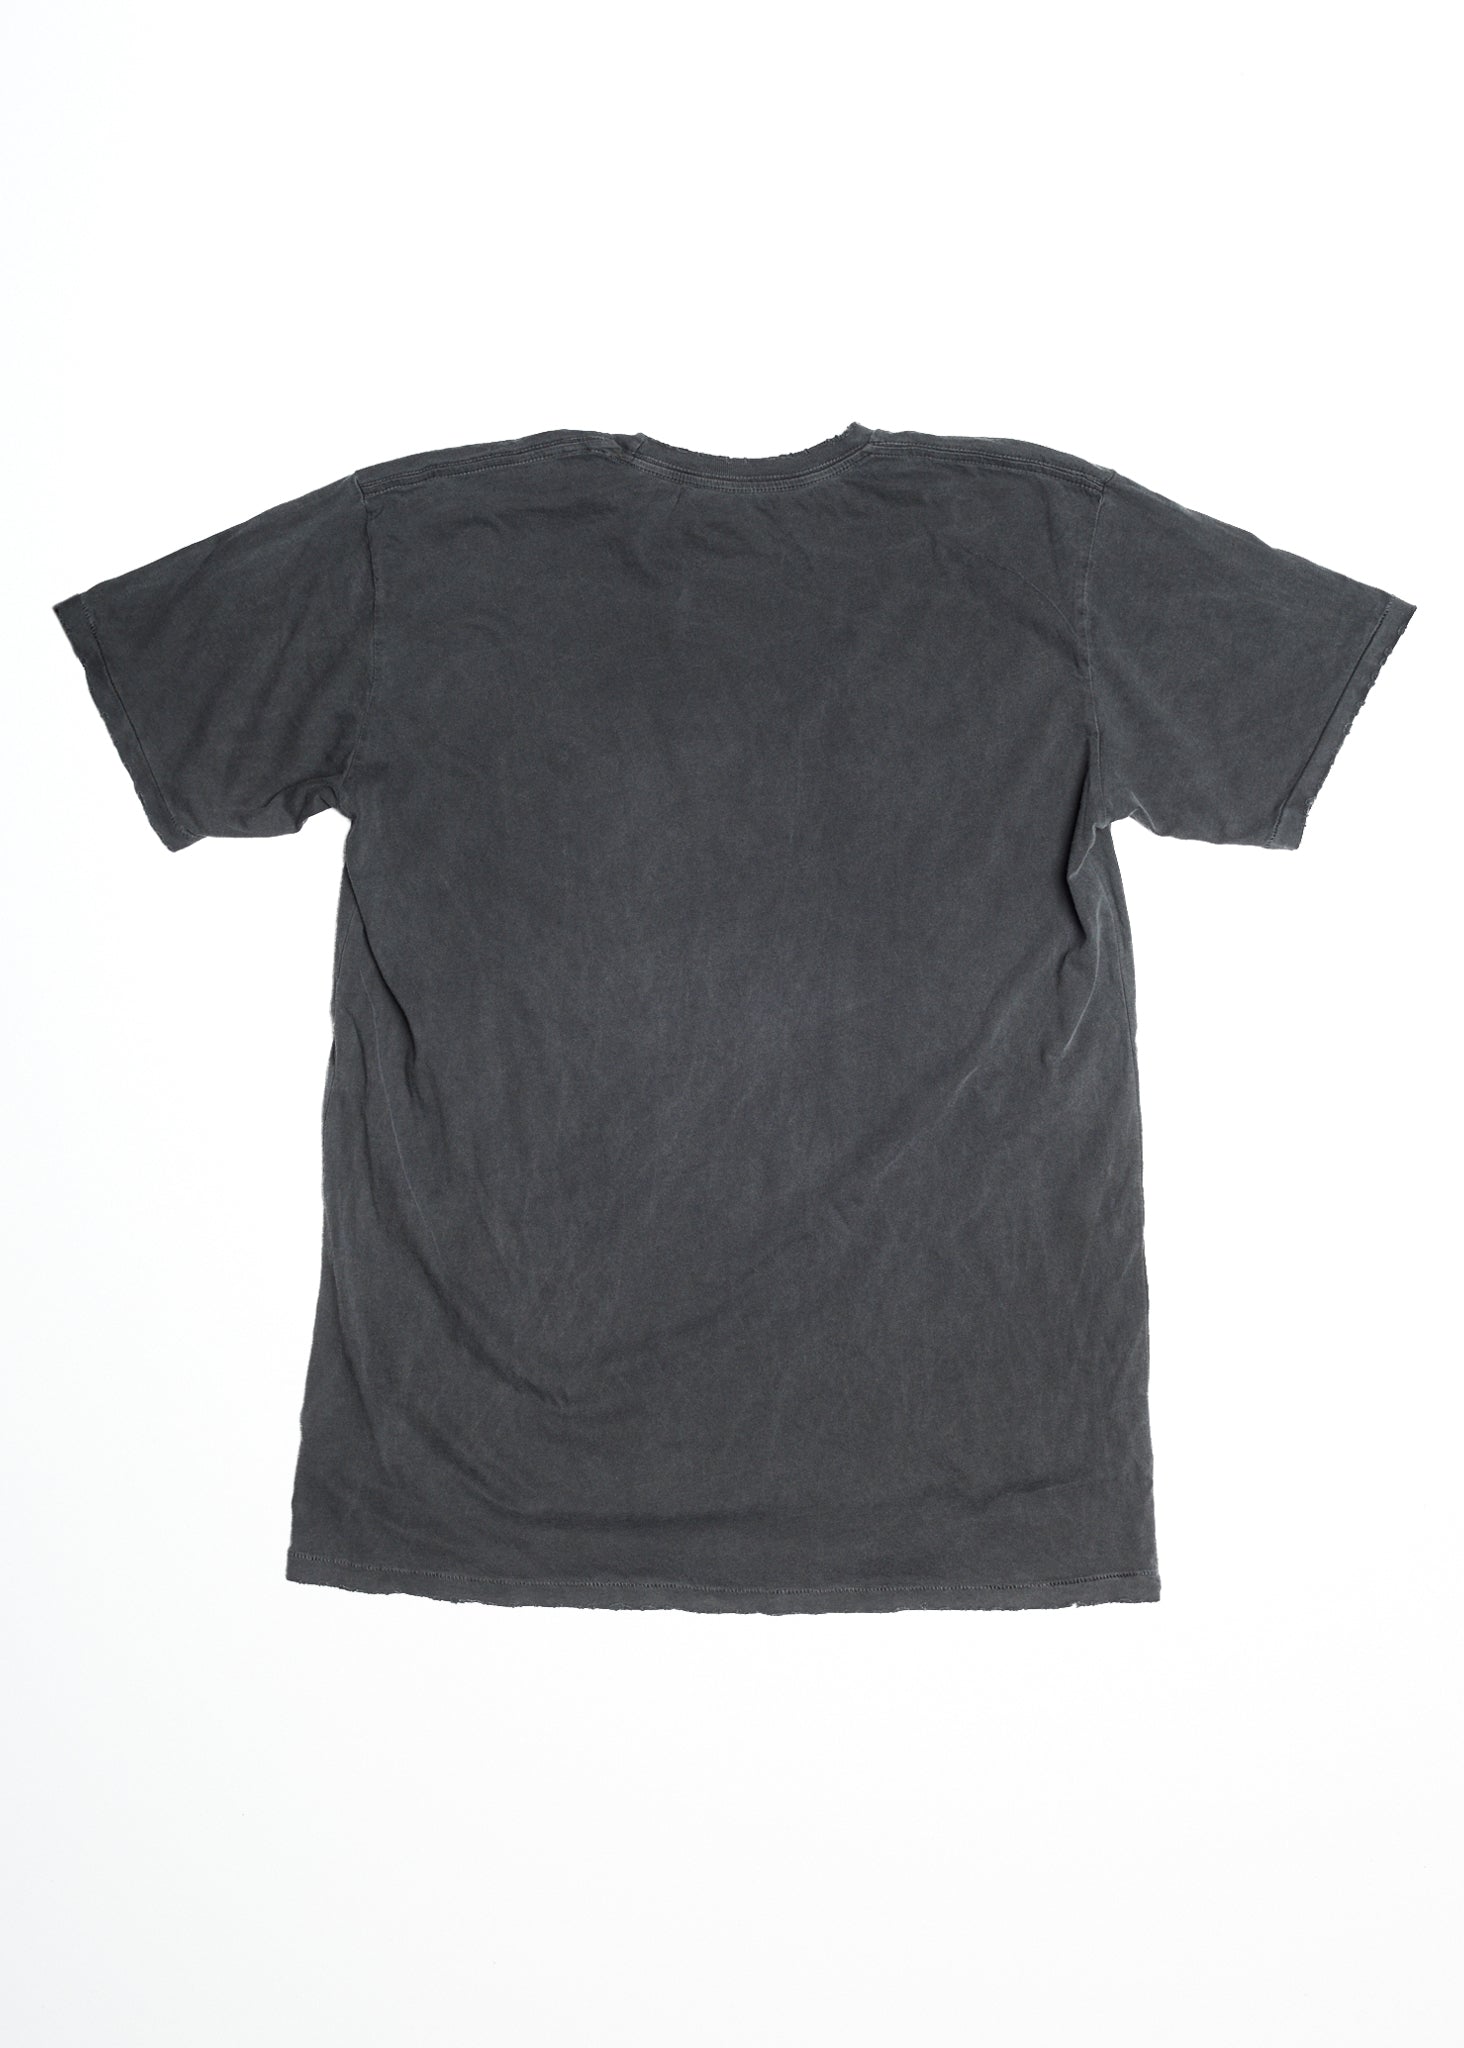 Jerry Garcia Band Men's T-Shirt – Midnight Rider